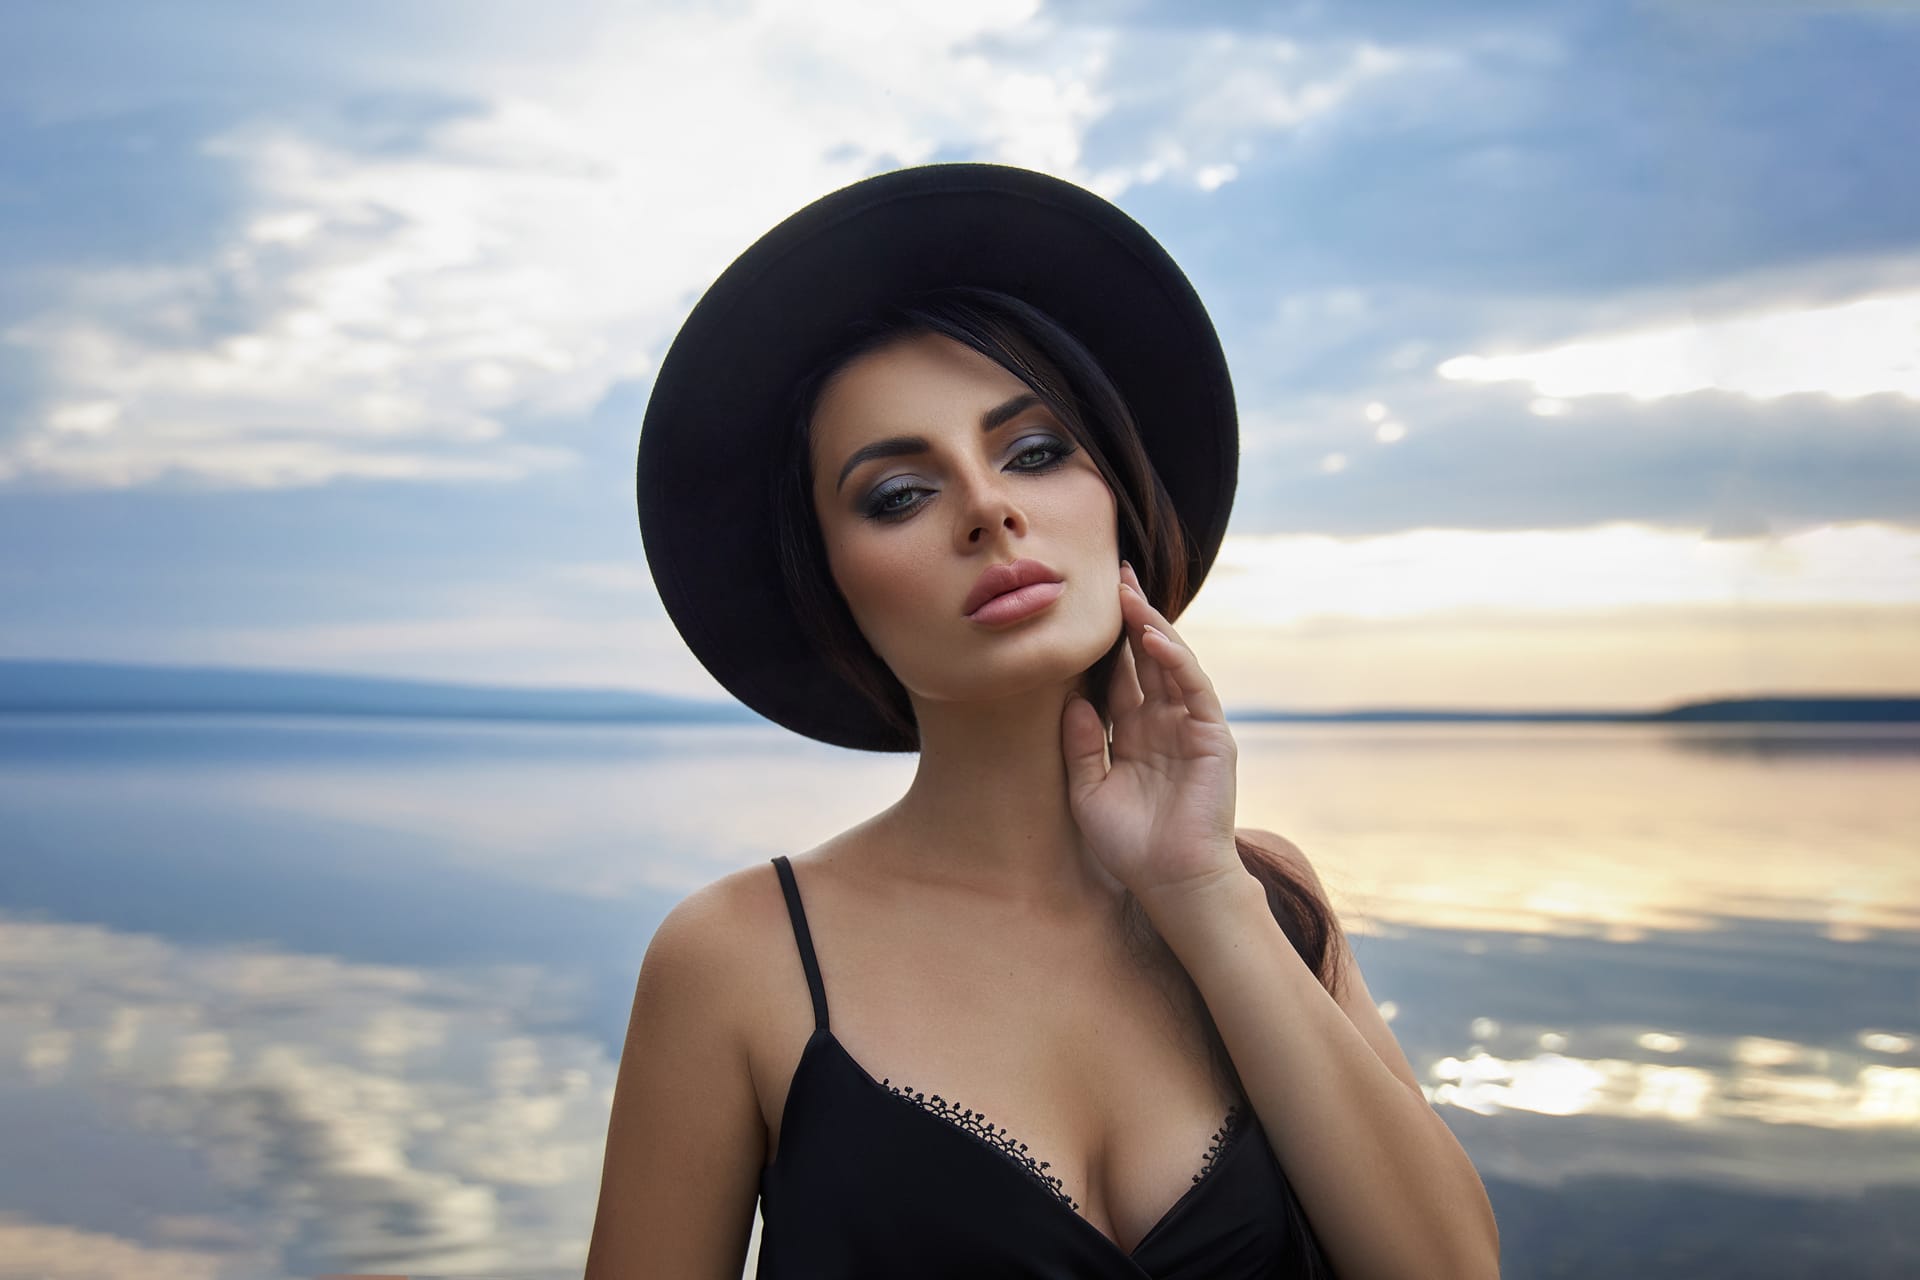 Brunette beauty woman black hat black dress poses near lake against blue sky